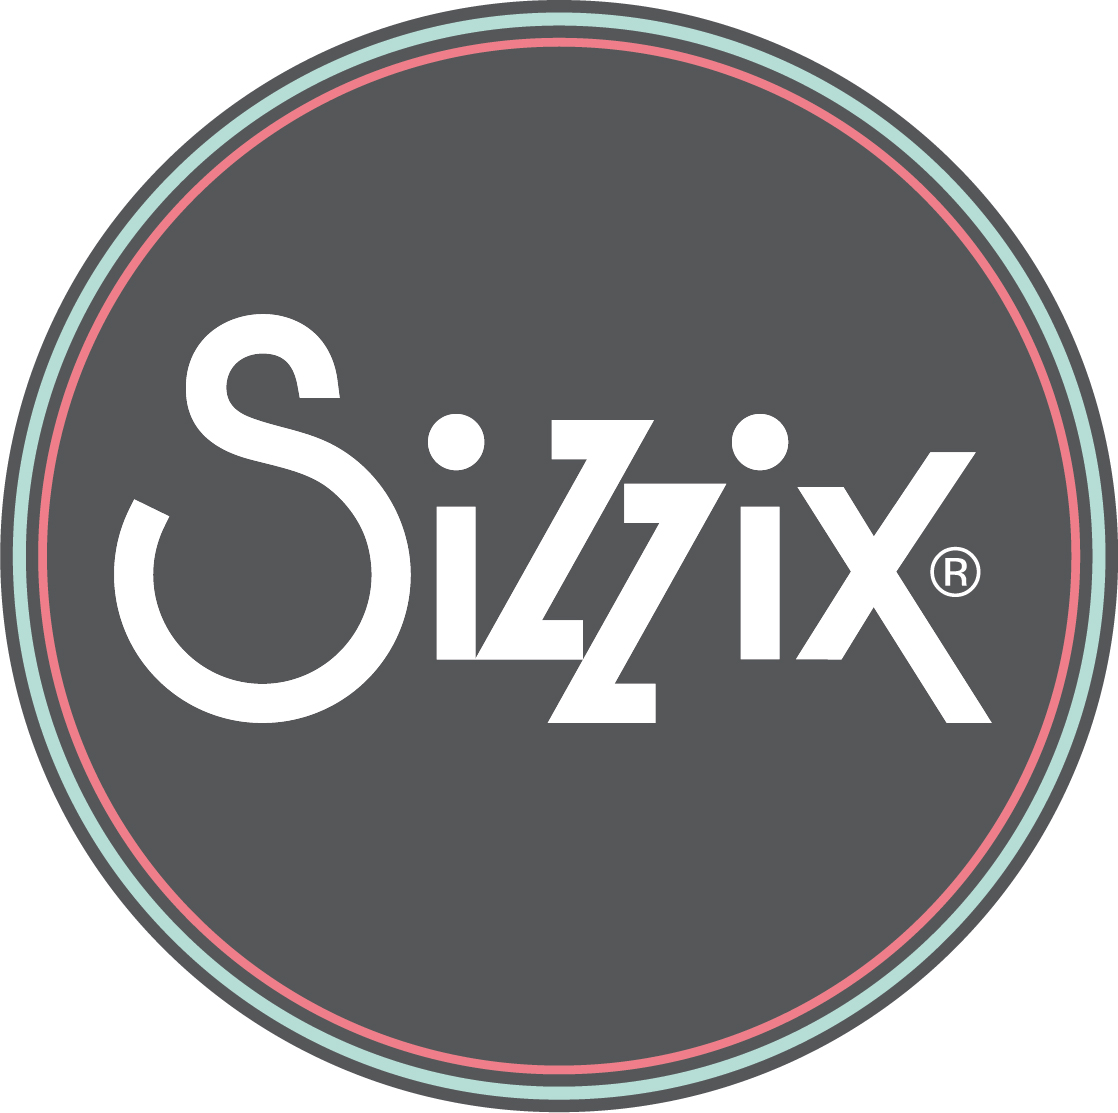 I design for Sizzix Lifestyle